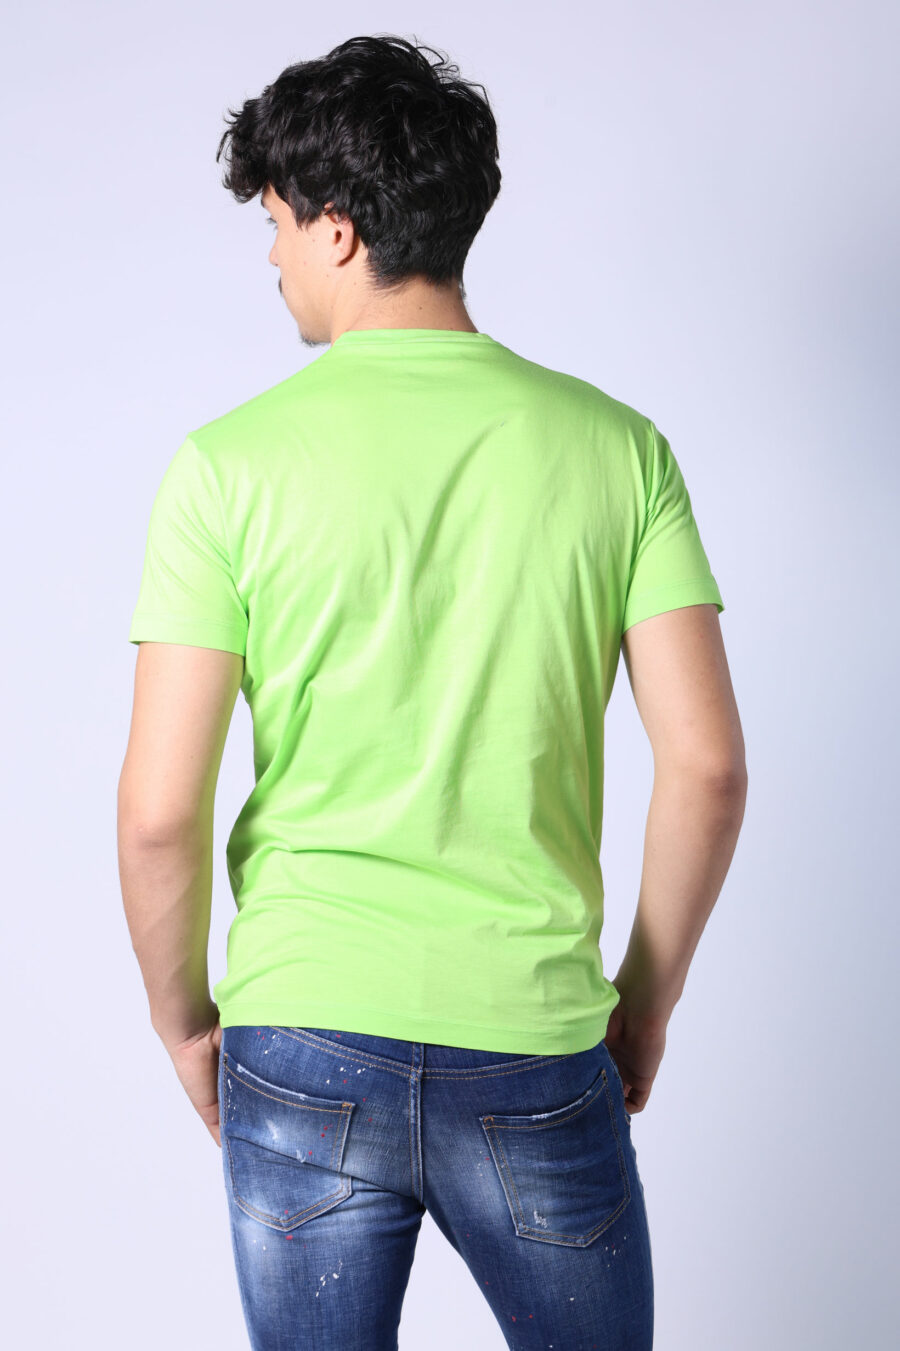 Lime grünes T-Shirt mit schwarzem "Icon" Maxilogo - Untitled Catalog 05397